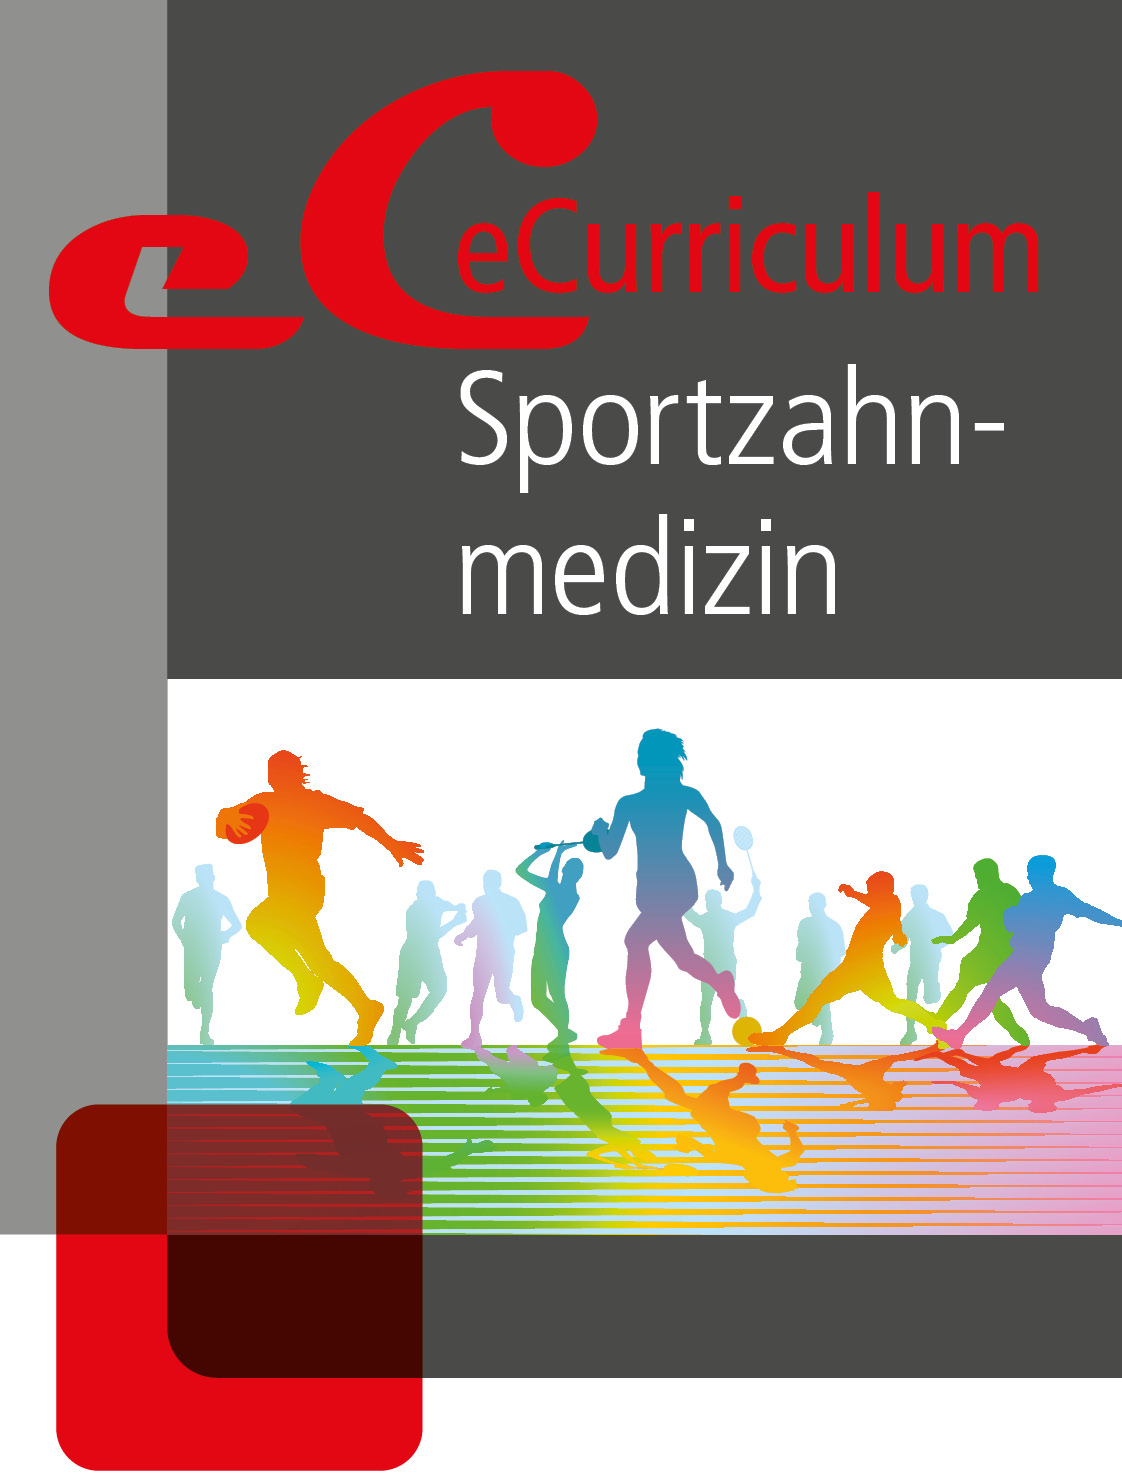 Sportzahnmedizin - Zertifizierung zum Sportzahnarzt/ärztin